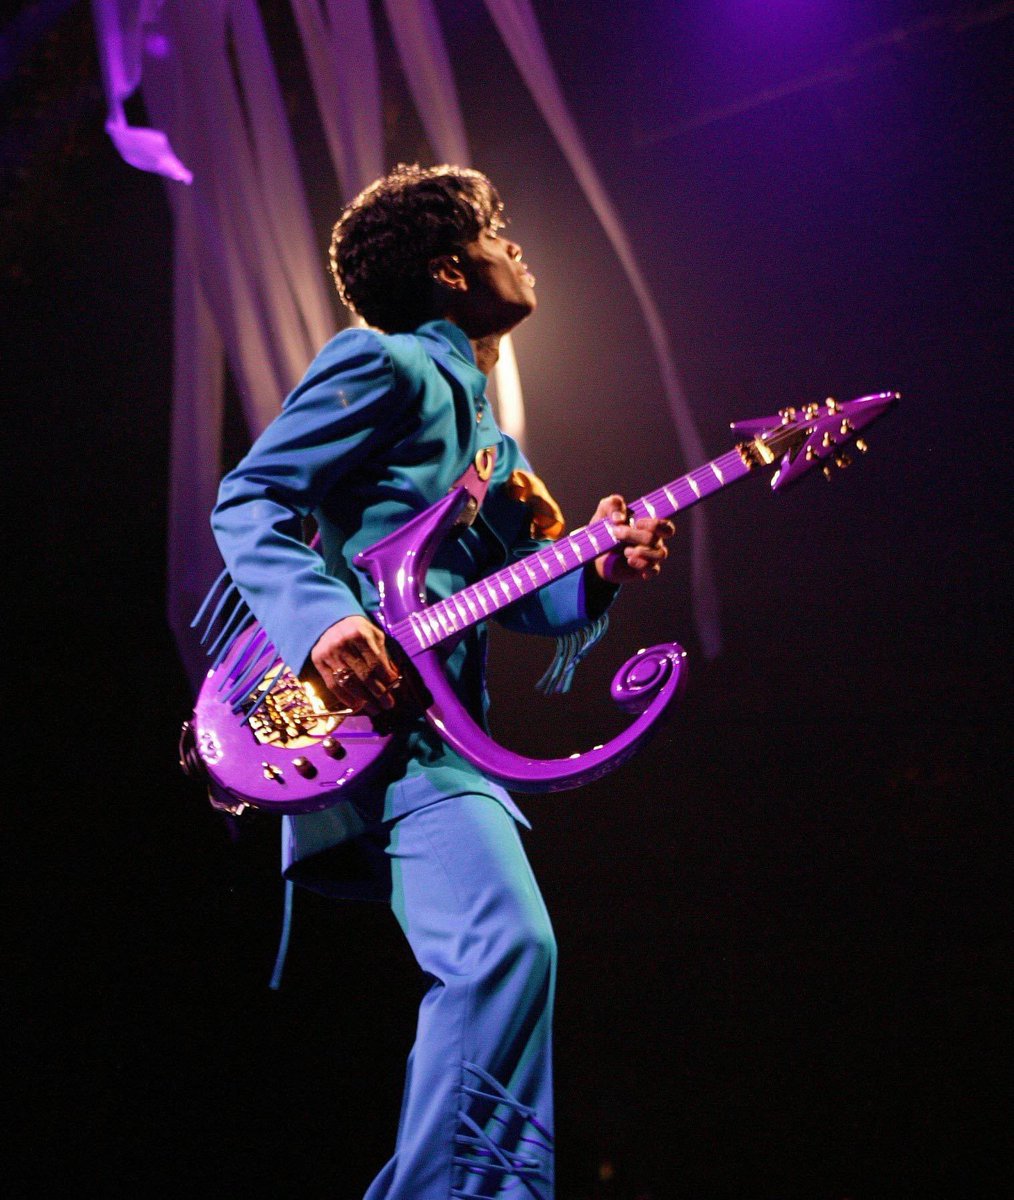 Happy 65th heavenly Birthday @Prince 💜
#RIPPrince 💜 #PrinceDay #June7th 💜
@Malckie92 @eIhaime @DanDeckr